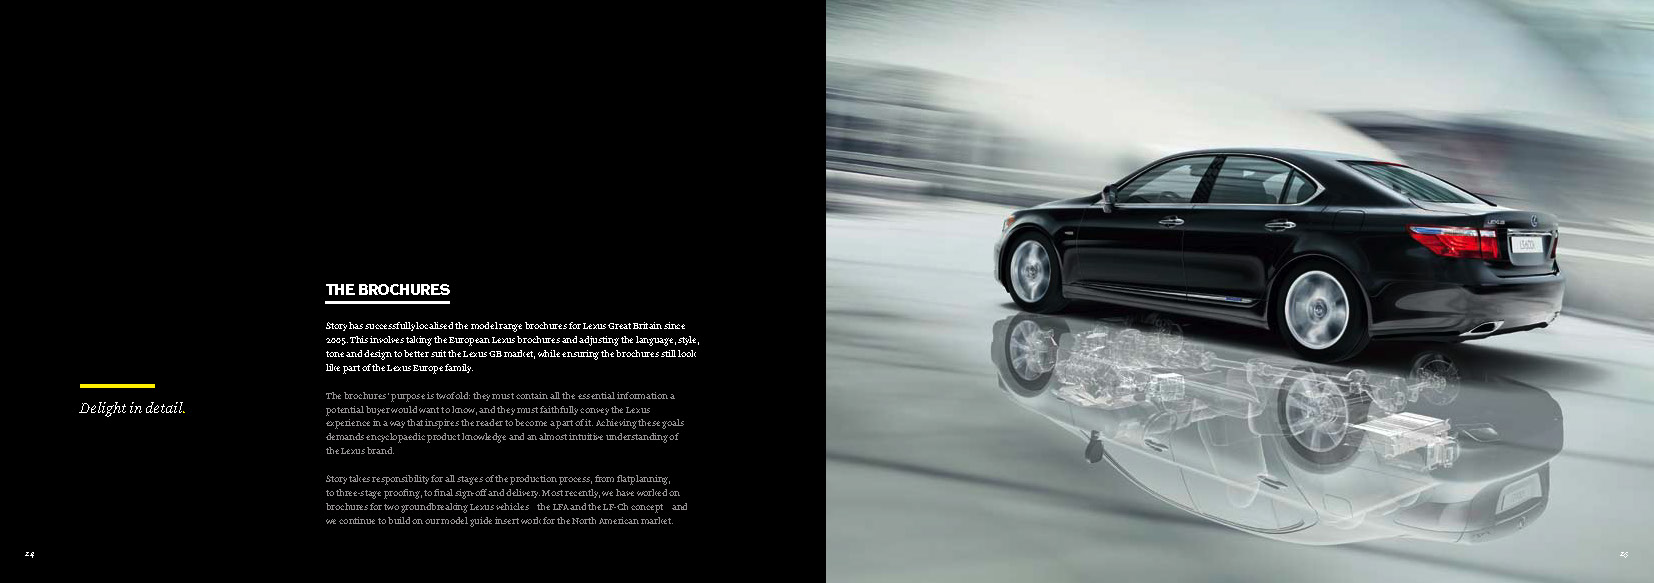 Lexus-case-study-Story-brochures